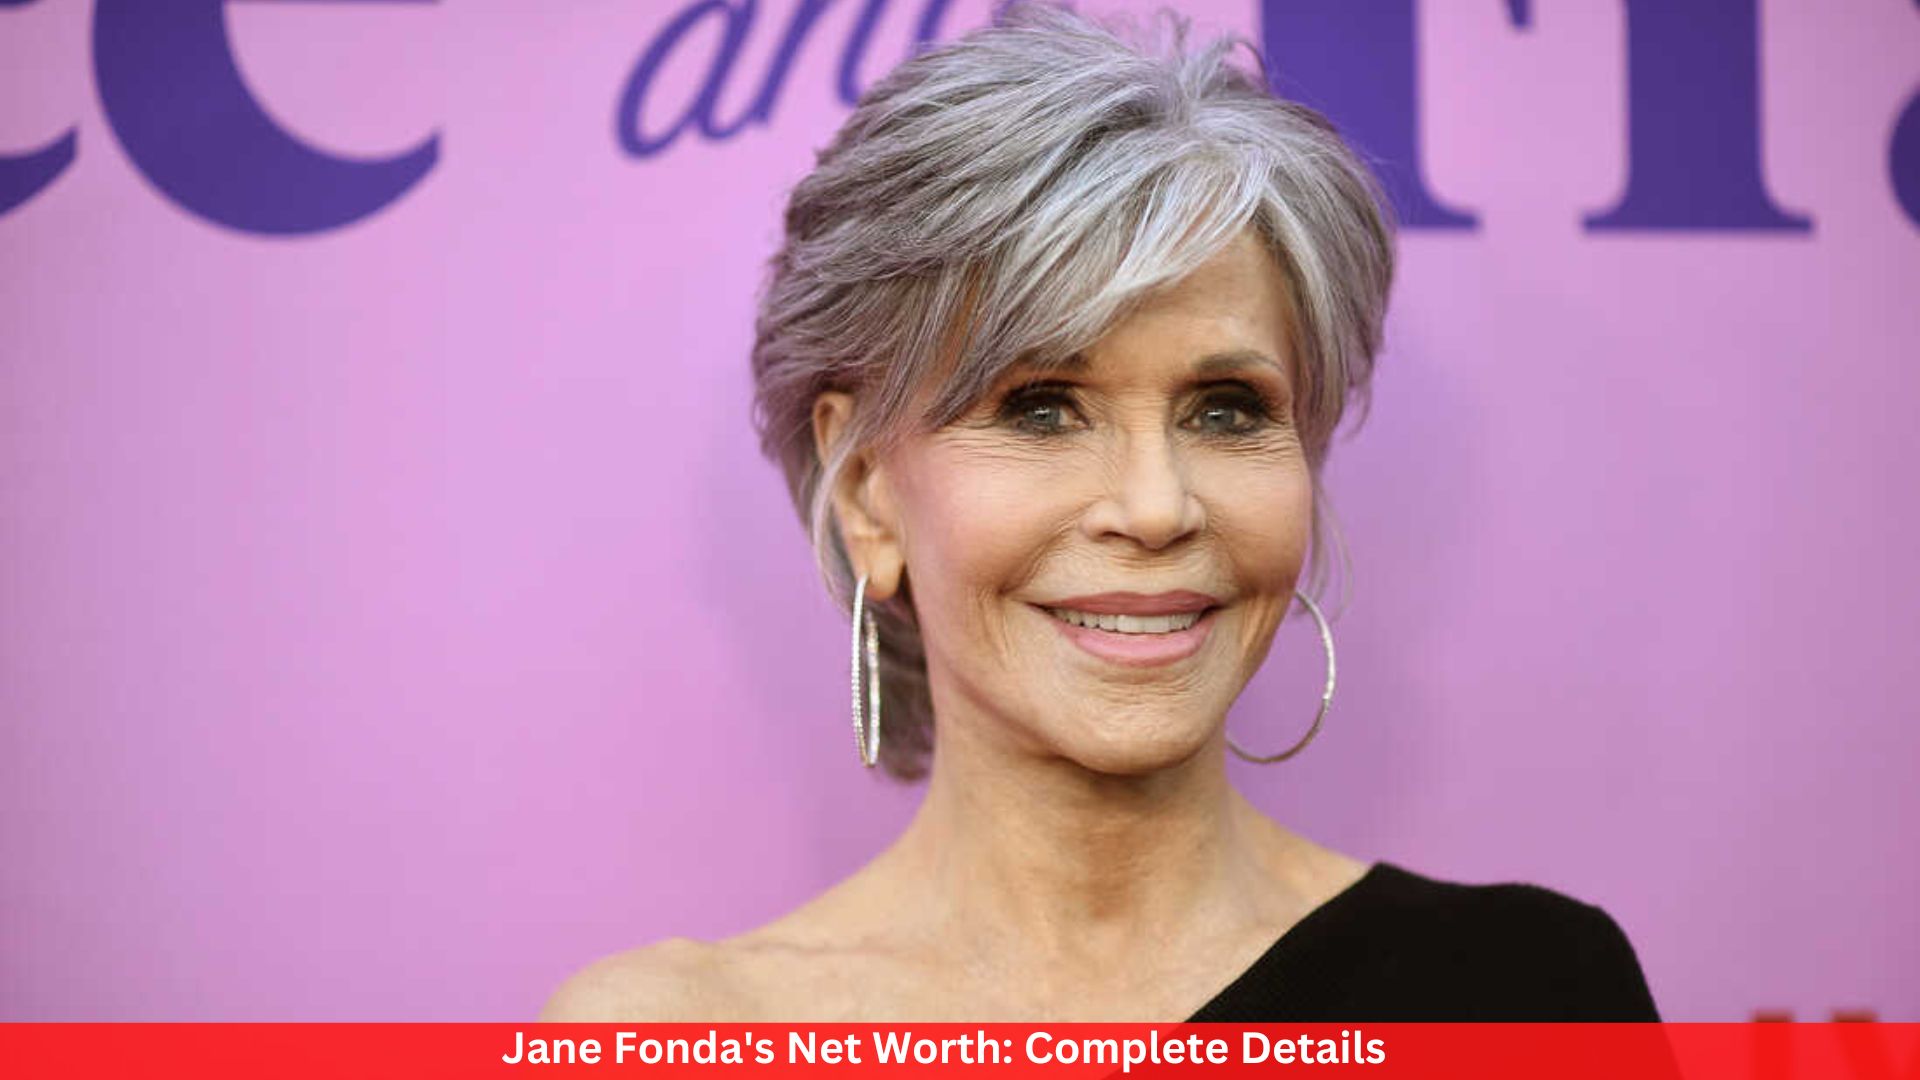 Jane Fonda's Net Worth: Complete Details